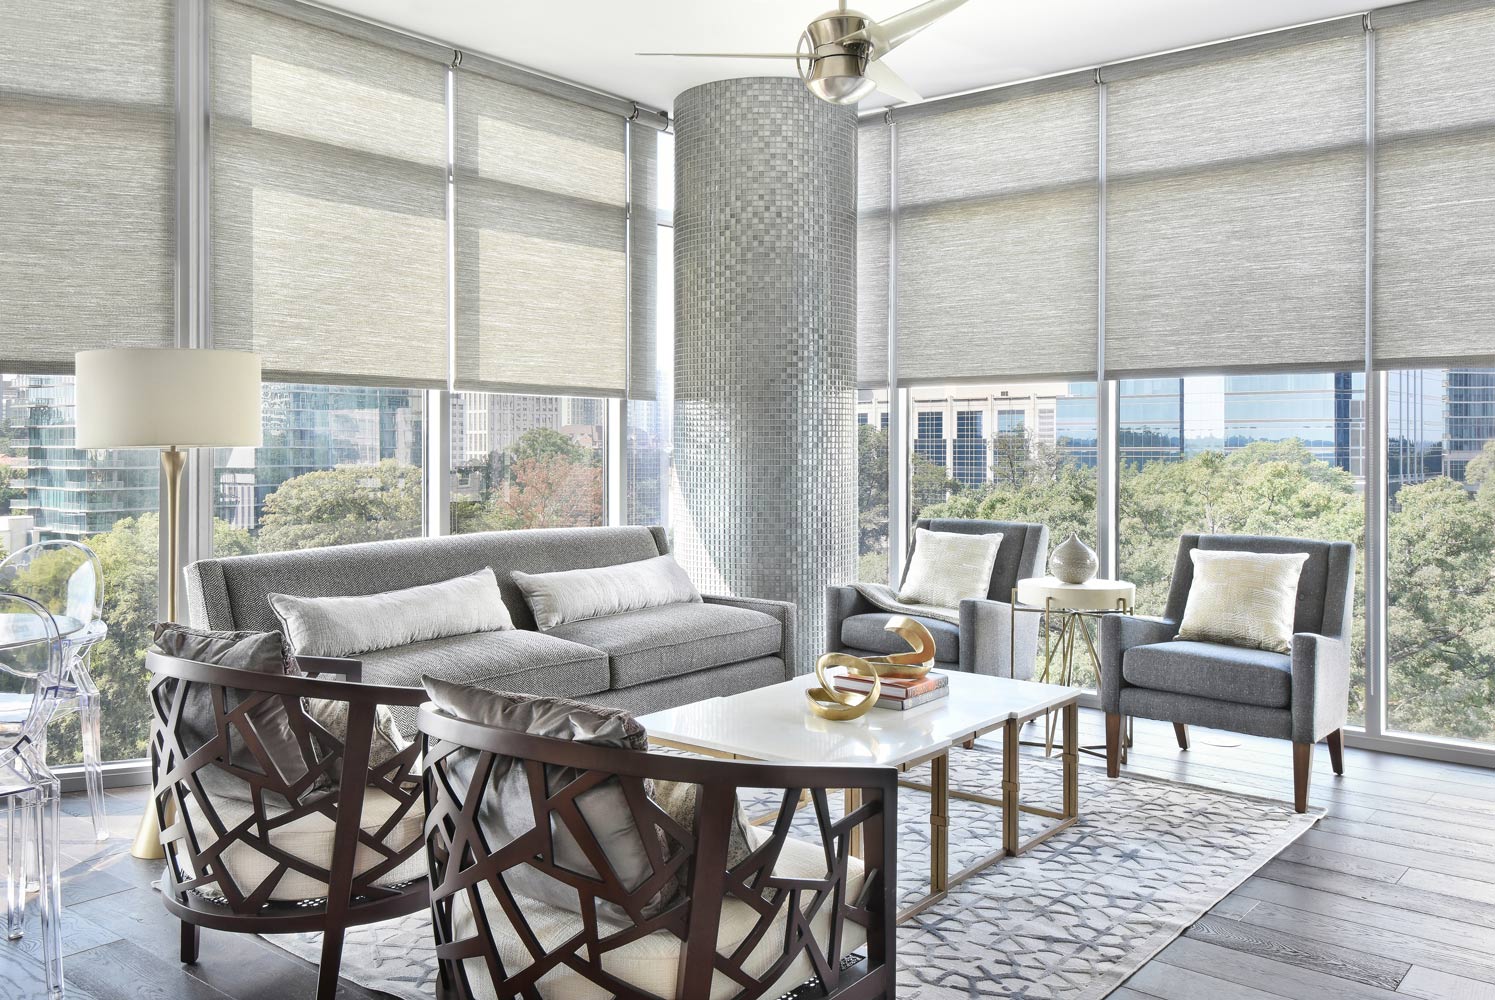 The Luxe in Atlanta living room interior design